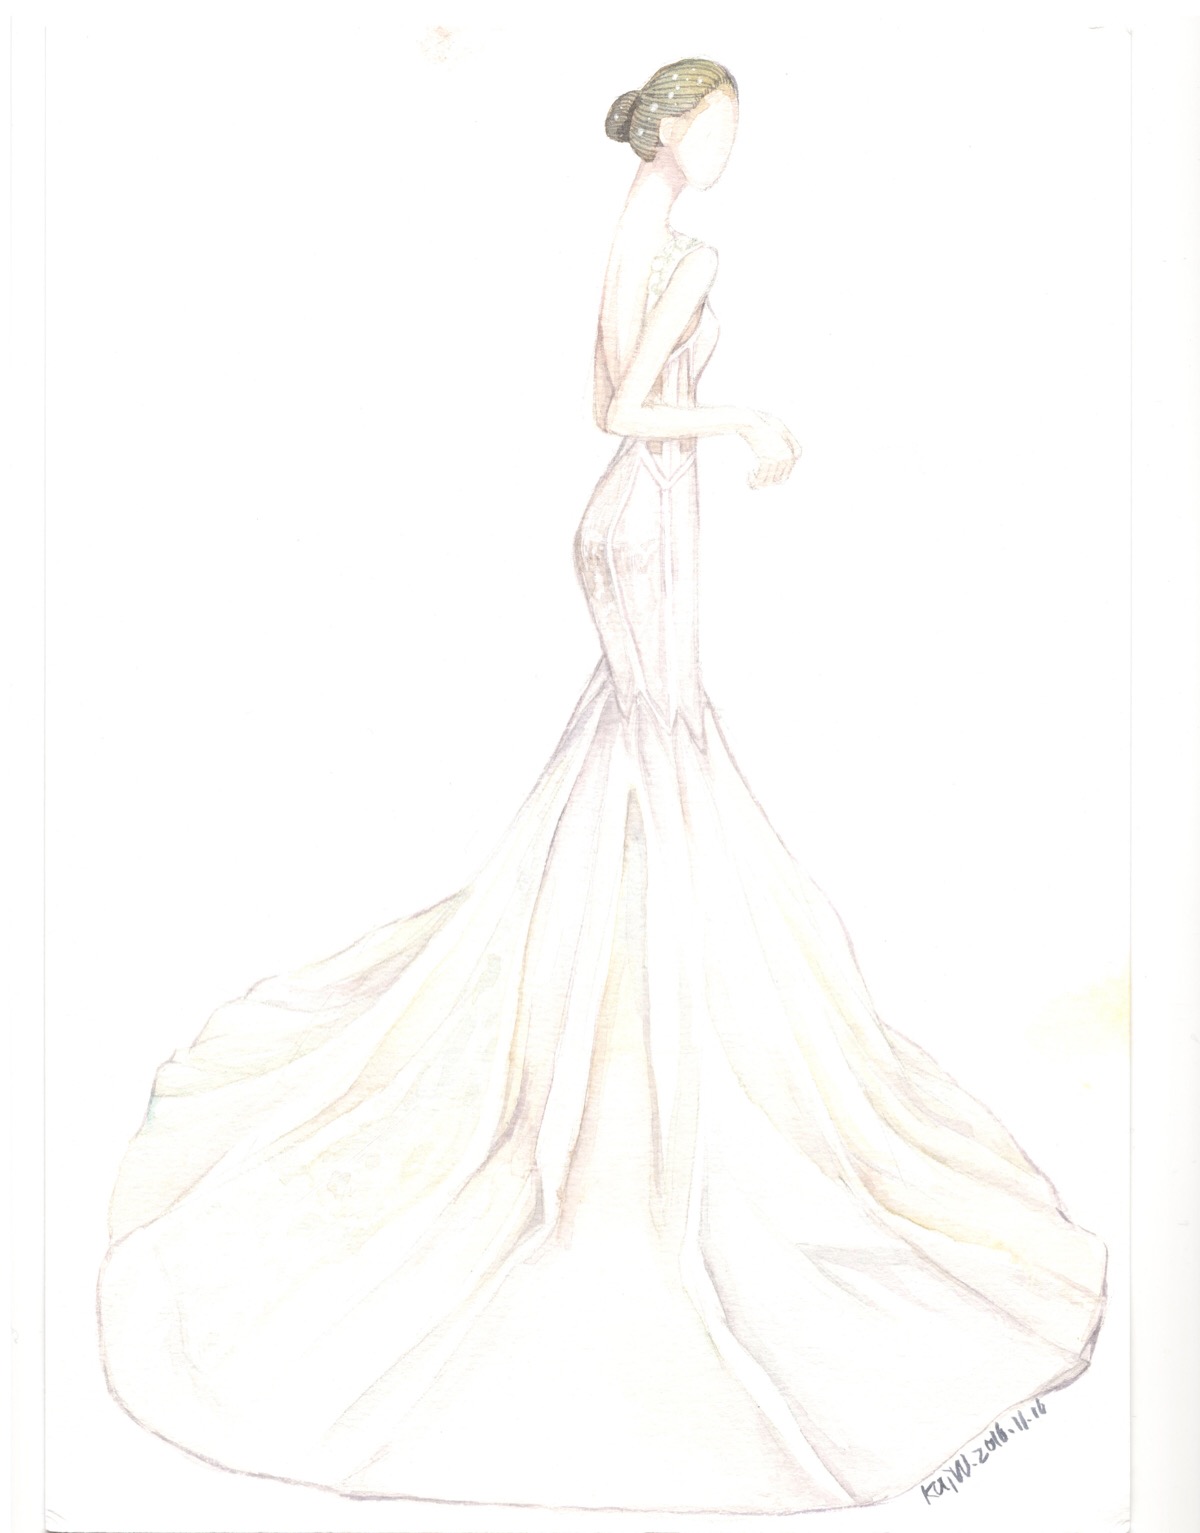 couture·y 高级婚纱礼服馆 设计师 kaiw 手稿 喜欢的话可以关注微博